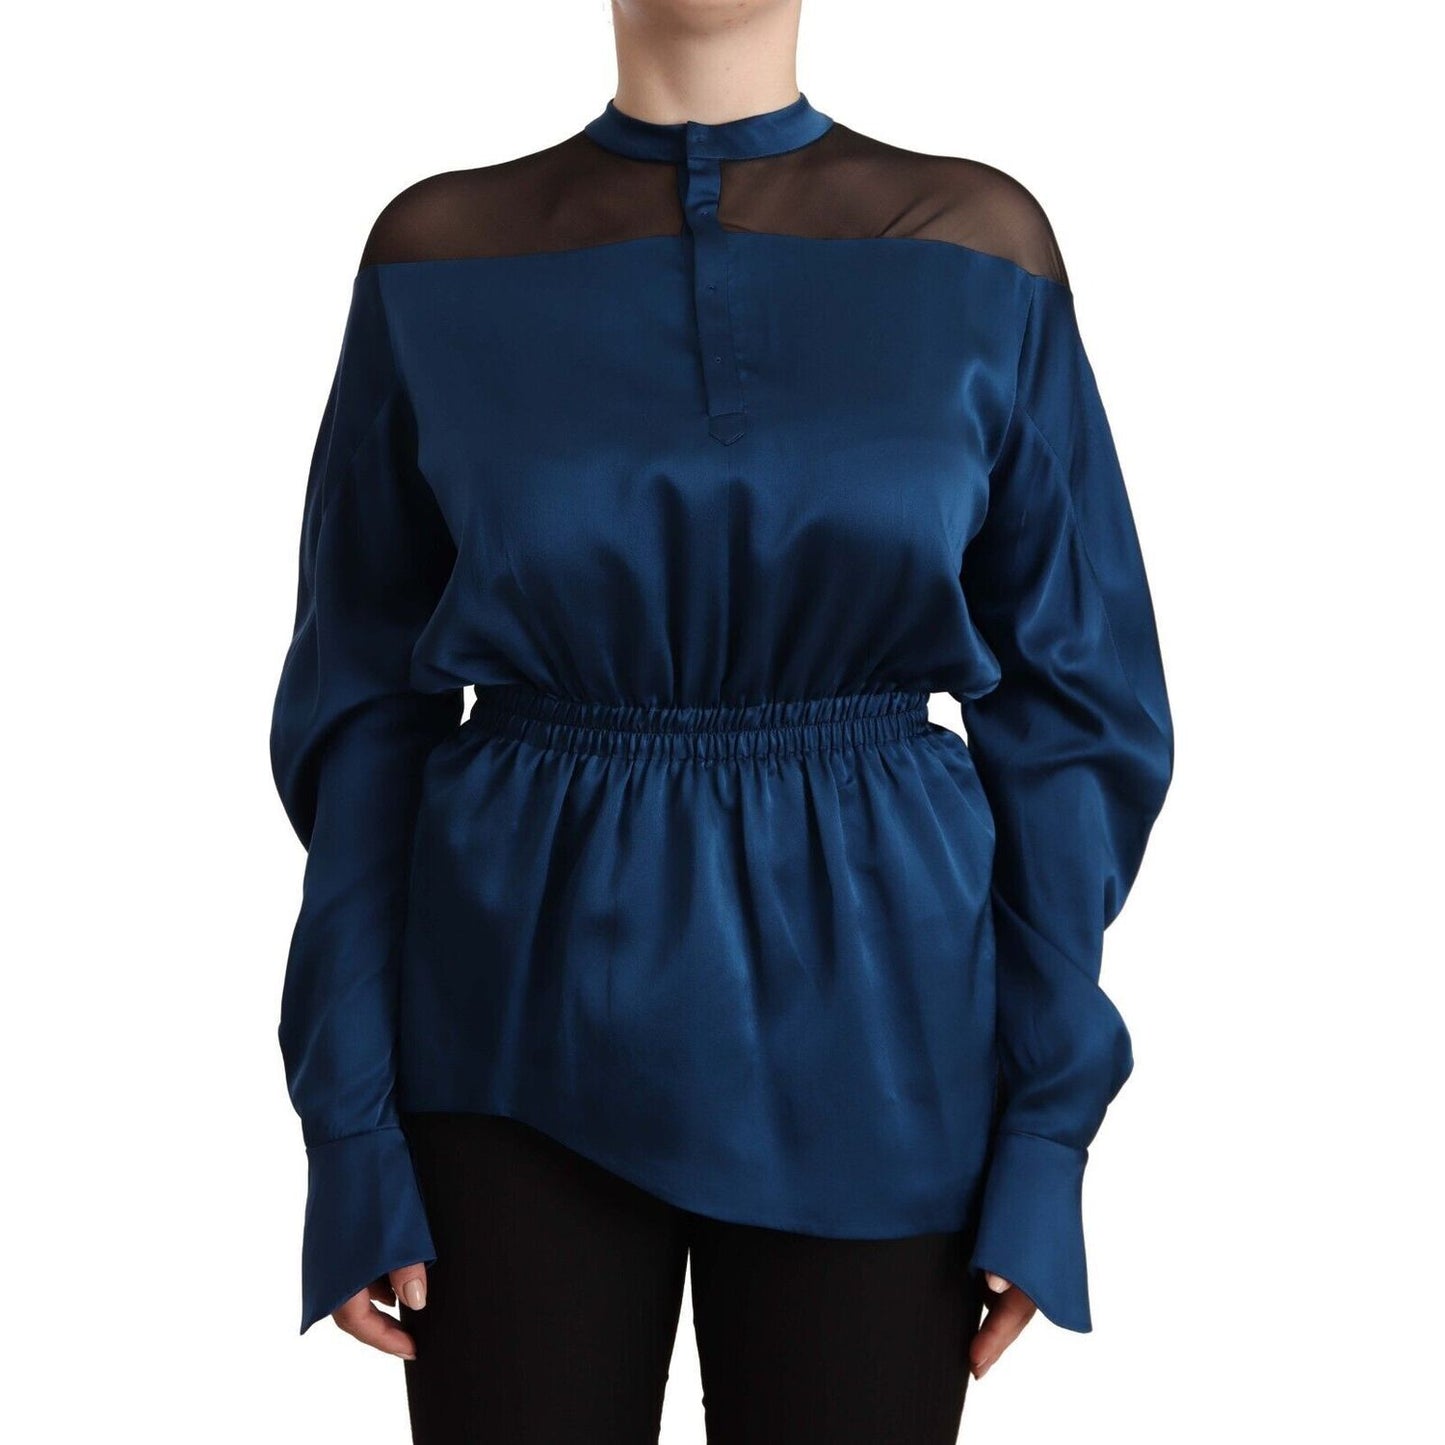 Masha Ma Elegant Crew Neck Silk Blouse in Blue WOMAN TOPS AND SHIRTS blue-silk-long-sleeves-elastic-waist-top-blouse s-l1600-32-f4dfffd7-27a.jpg